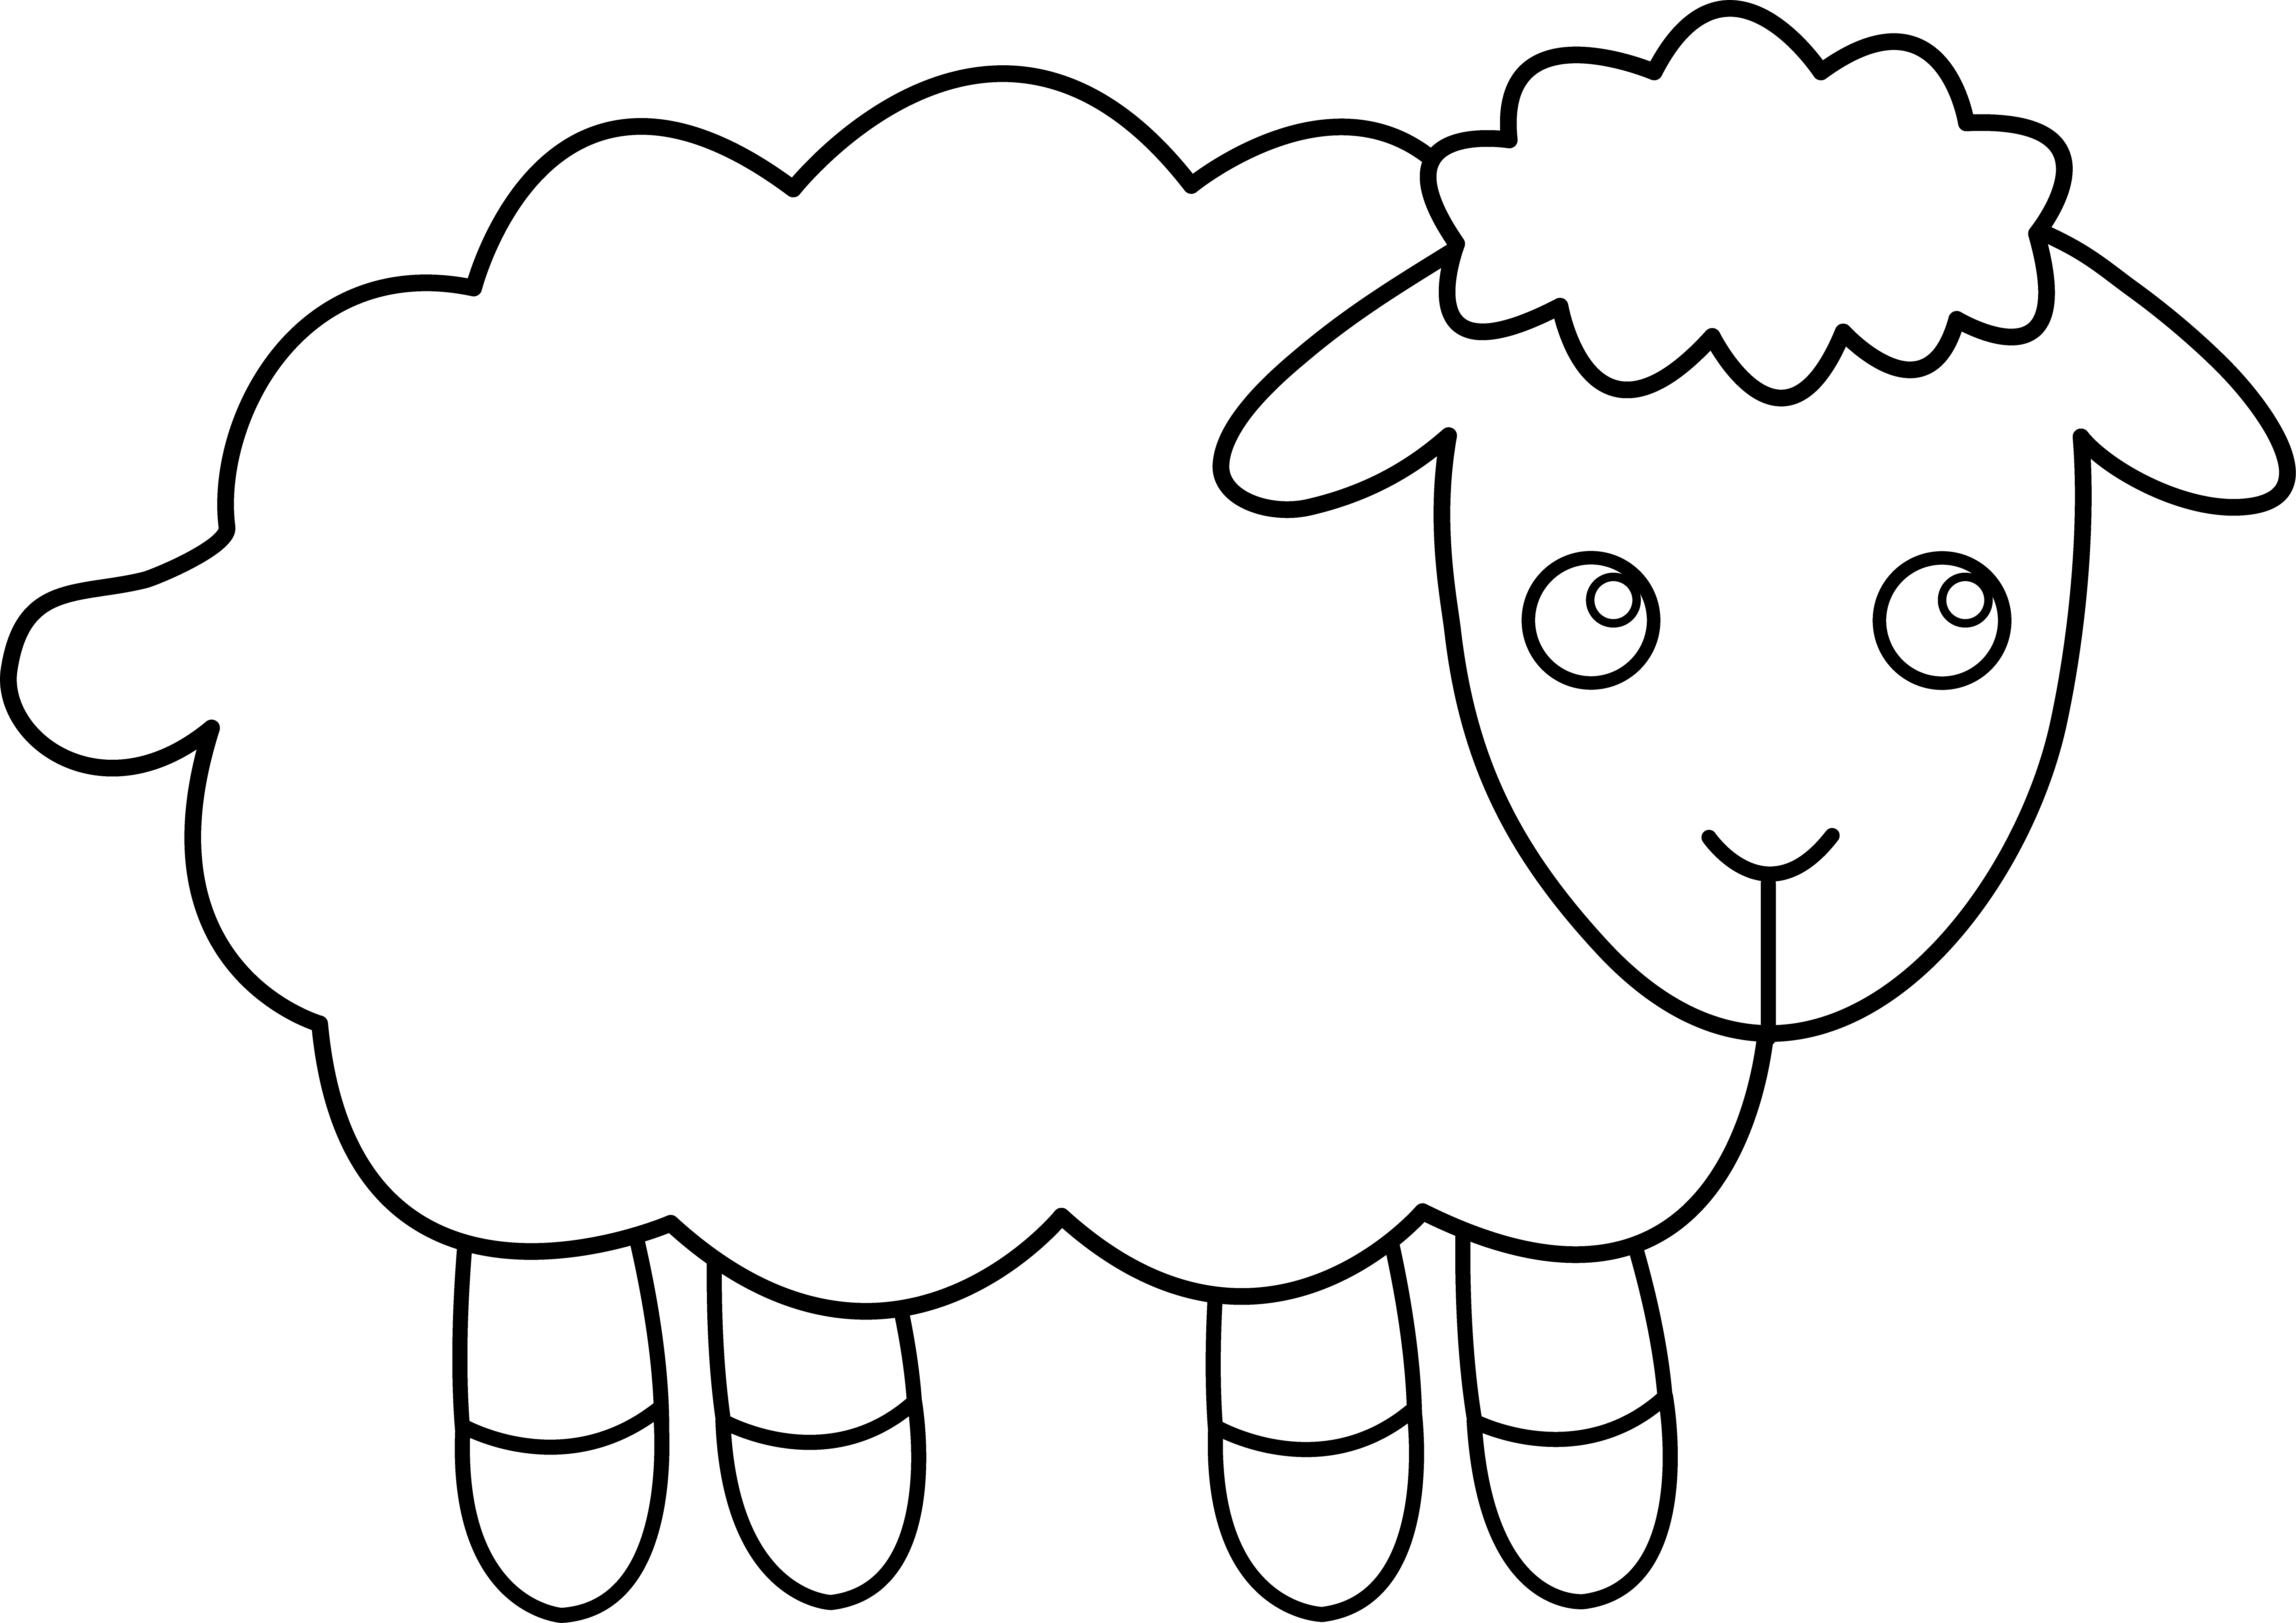 Best Photos of Sheep Drawing Template - Free Sheep Clip Art, Sheep ...